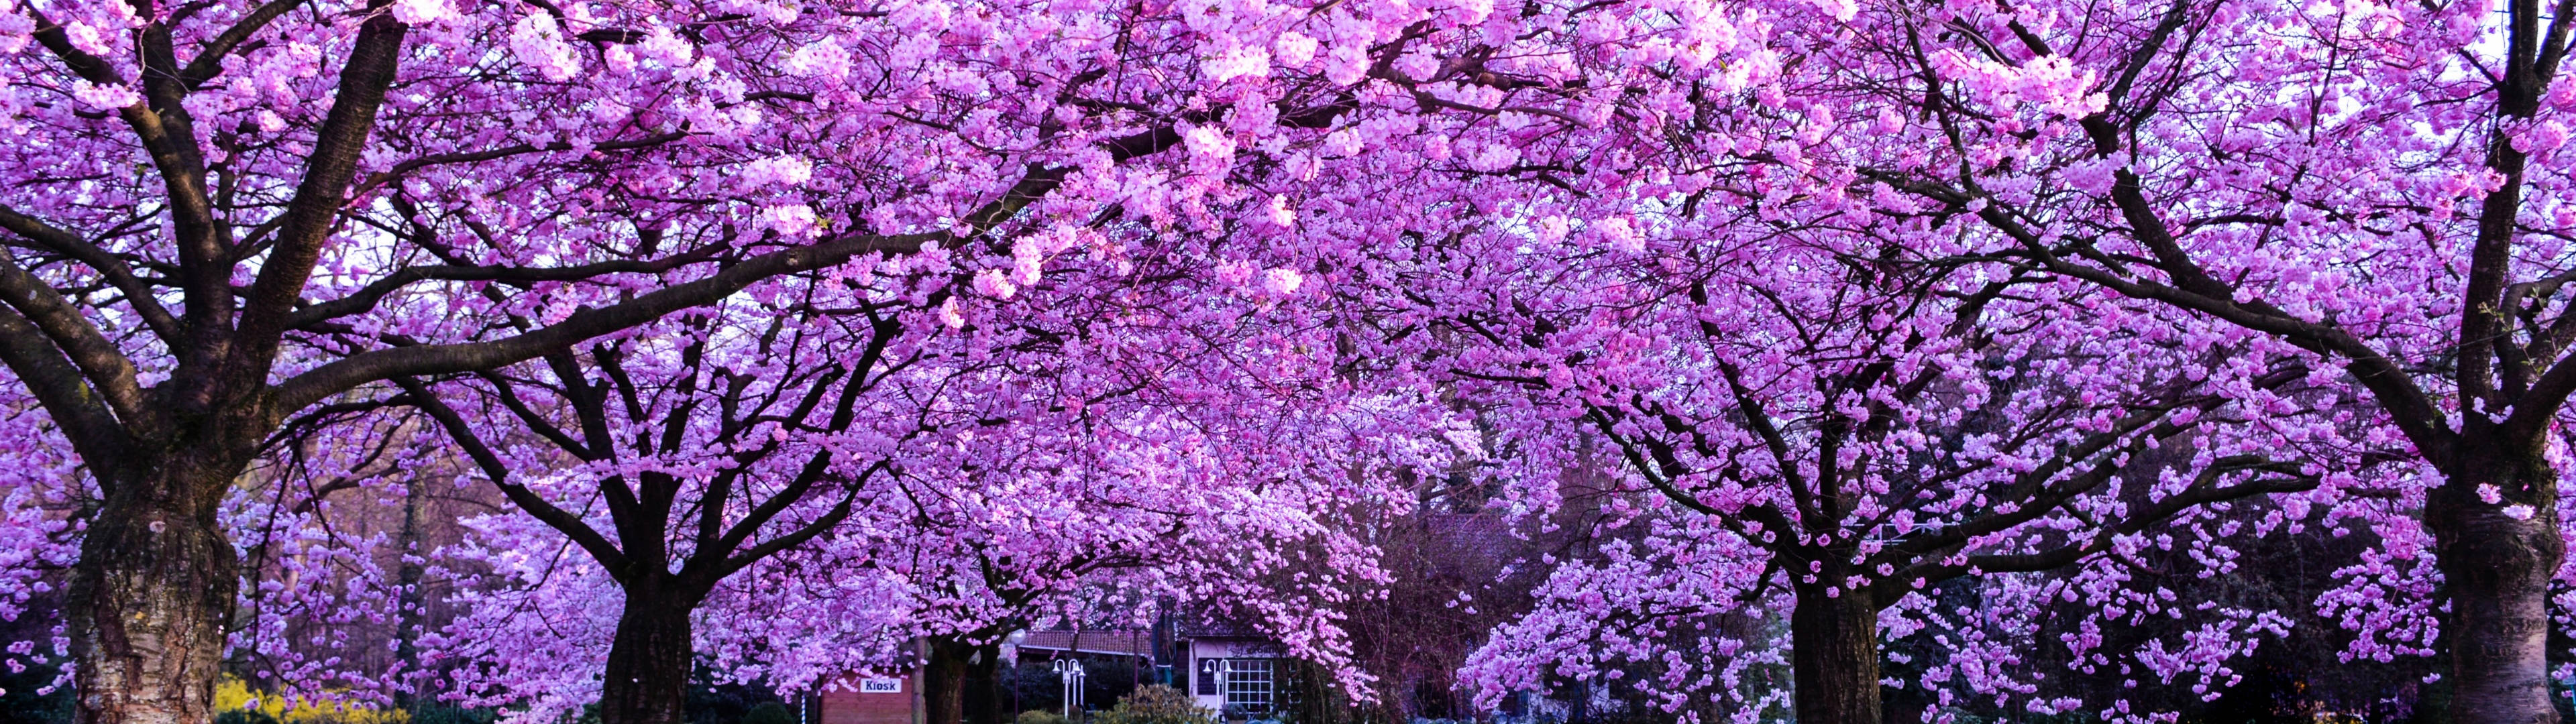 3840x1080 4k Cherry Blossom Trees